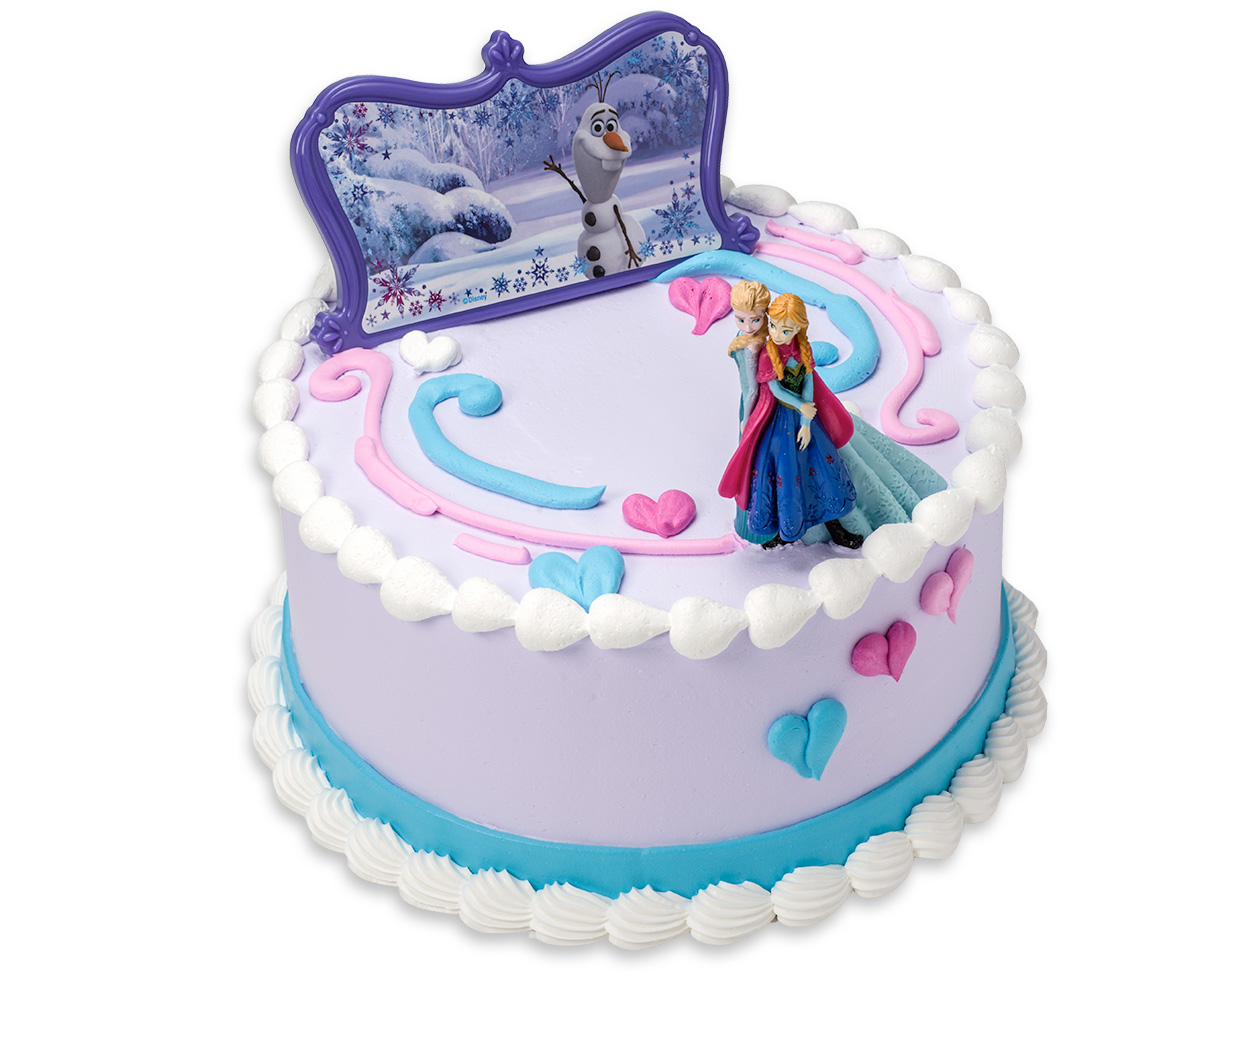 Home Design: Breathtaking Birthday Cake For Kids Designs ...